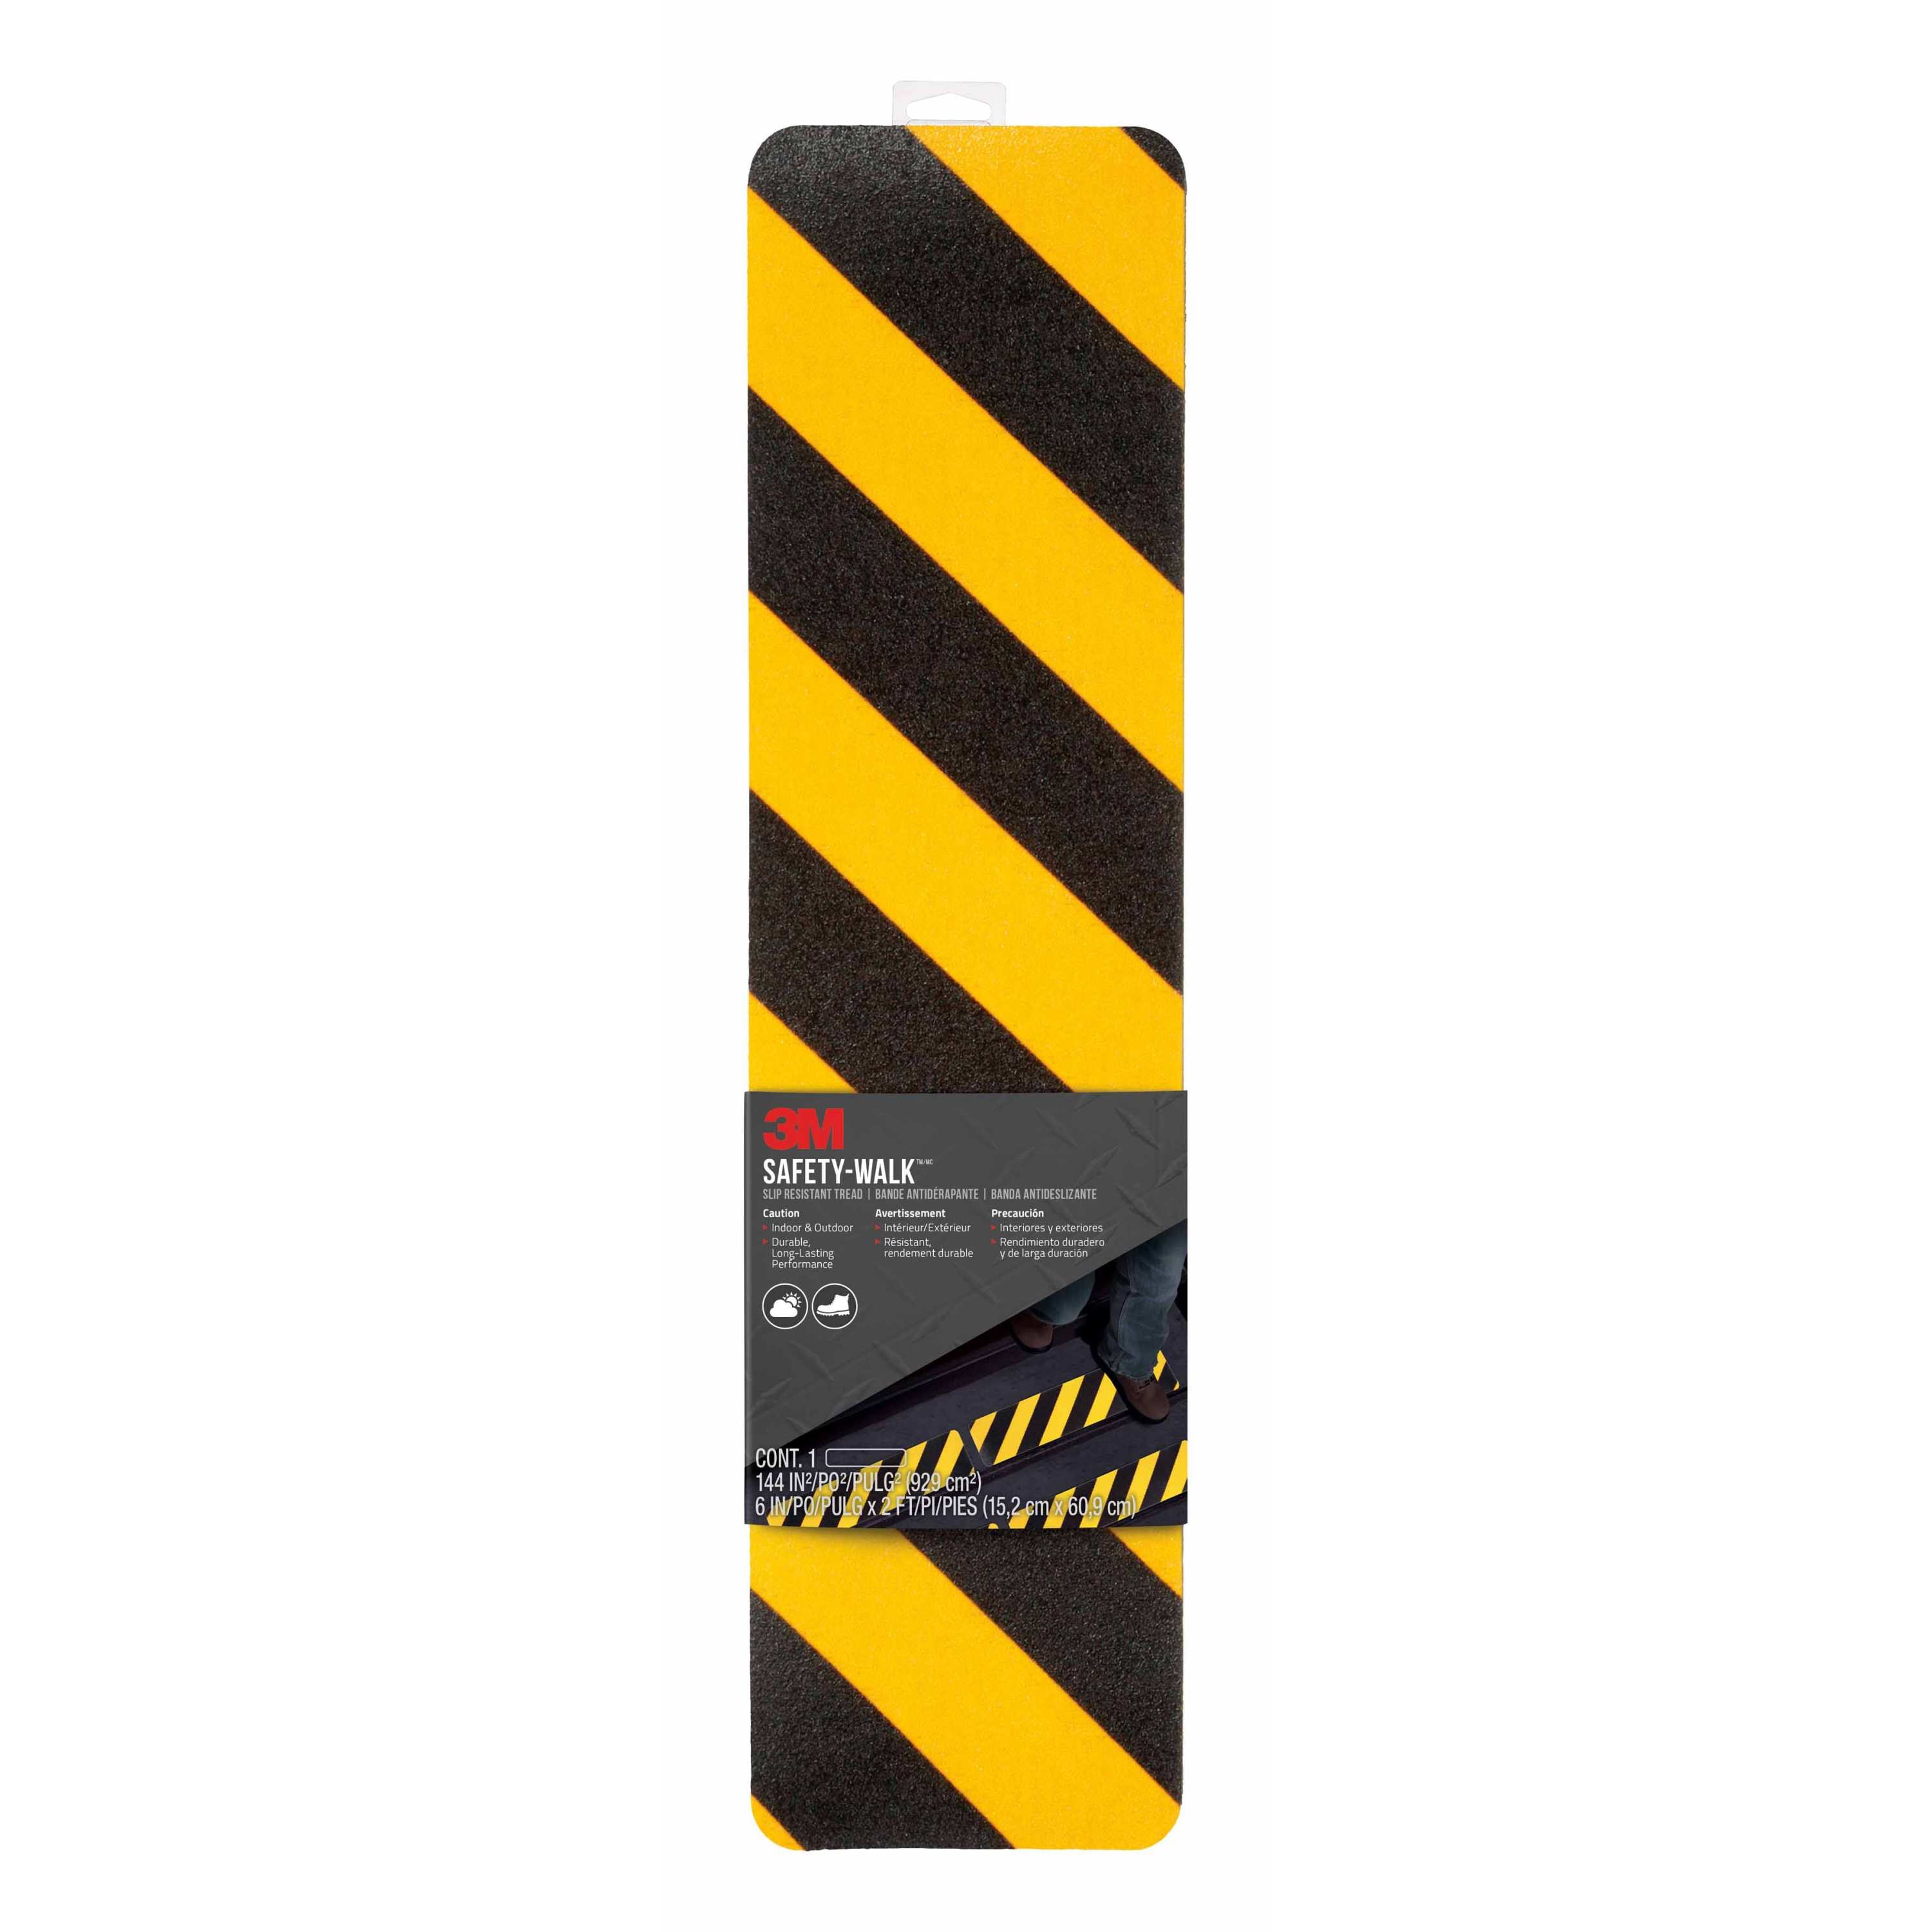 3M™ Safety-Walk™ Slip-Resistant Tread, 613BY-T6X24, Black/Yellow Stripe,
6 in x 2 ft